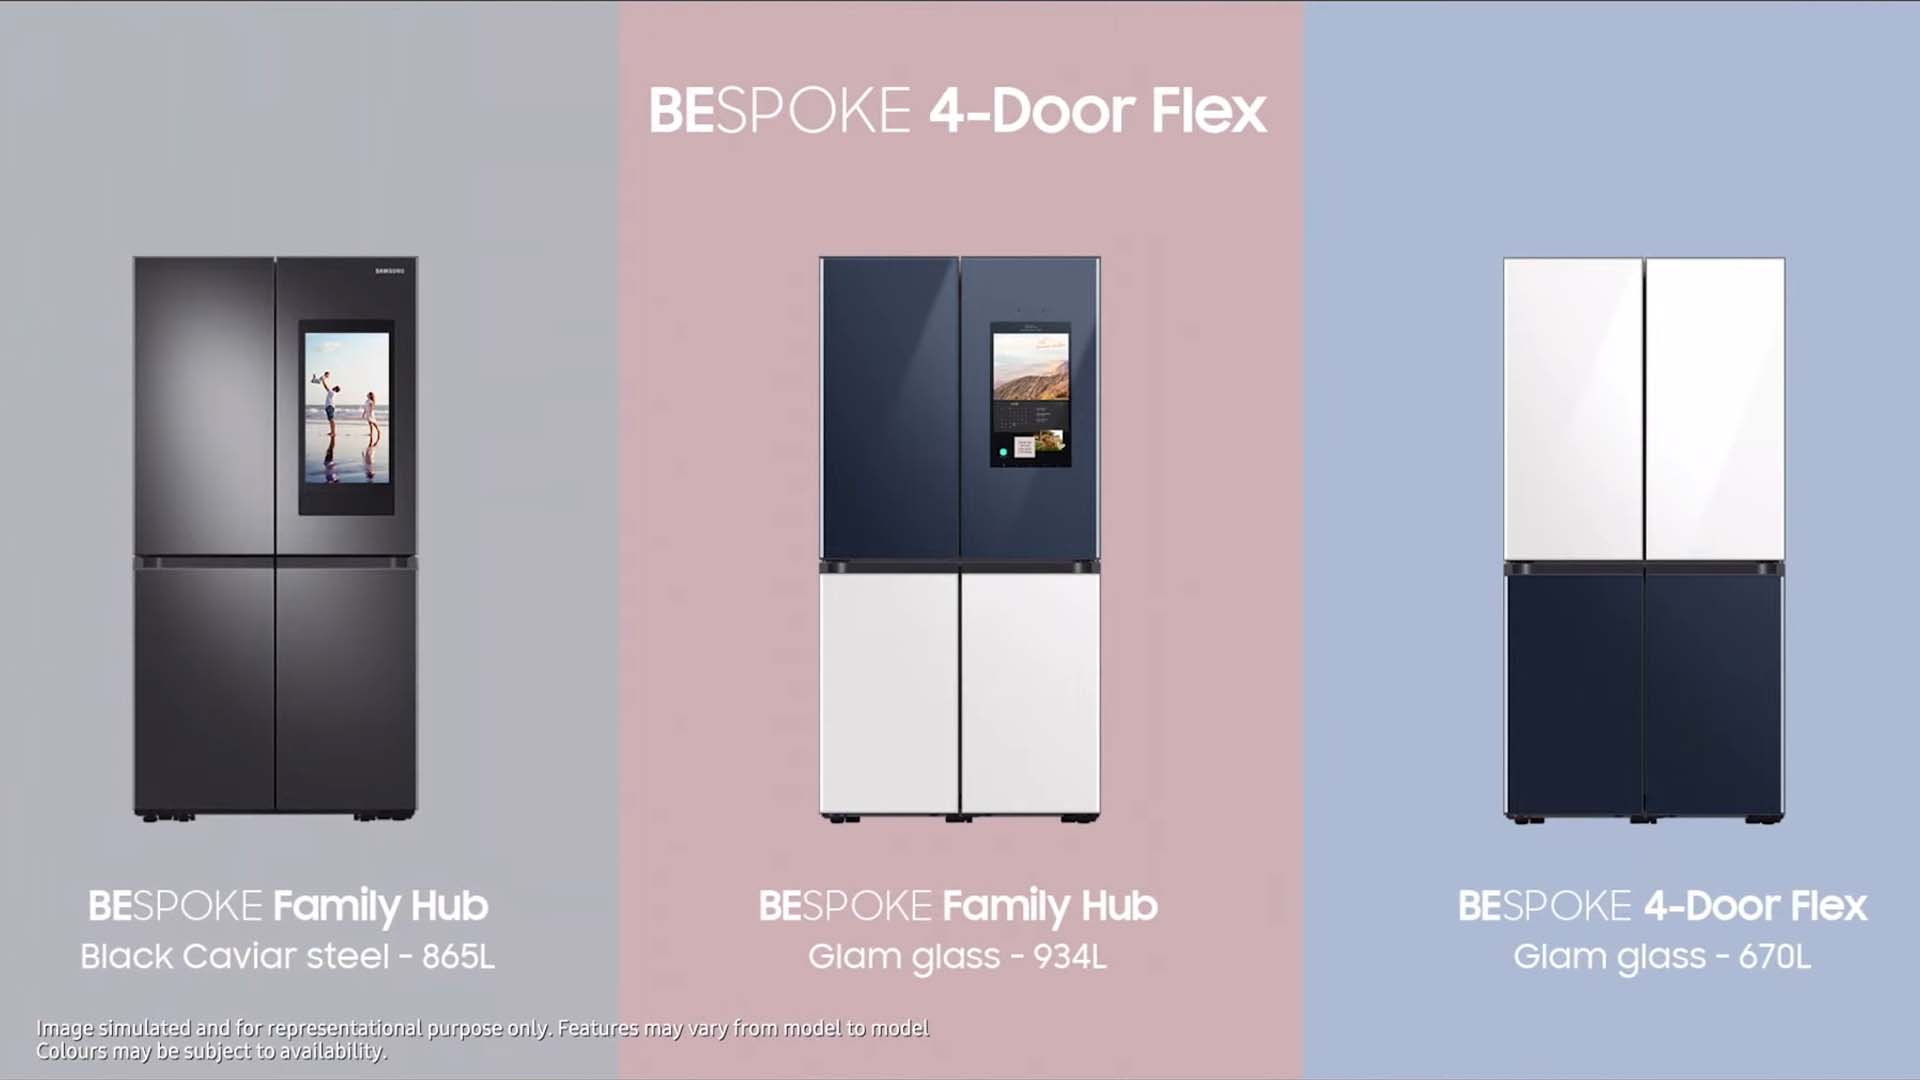 Samsung Bespoke Refrigerator Lineup 2021